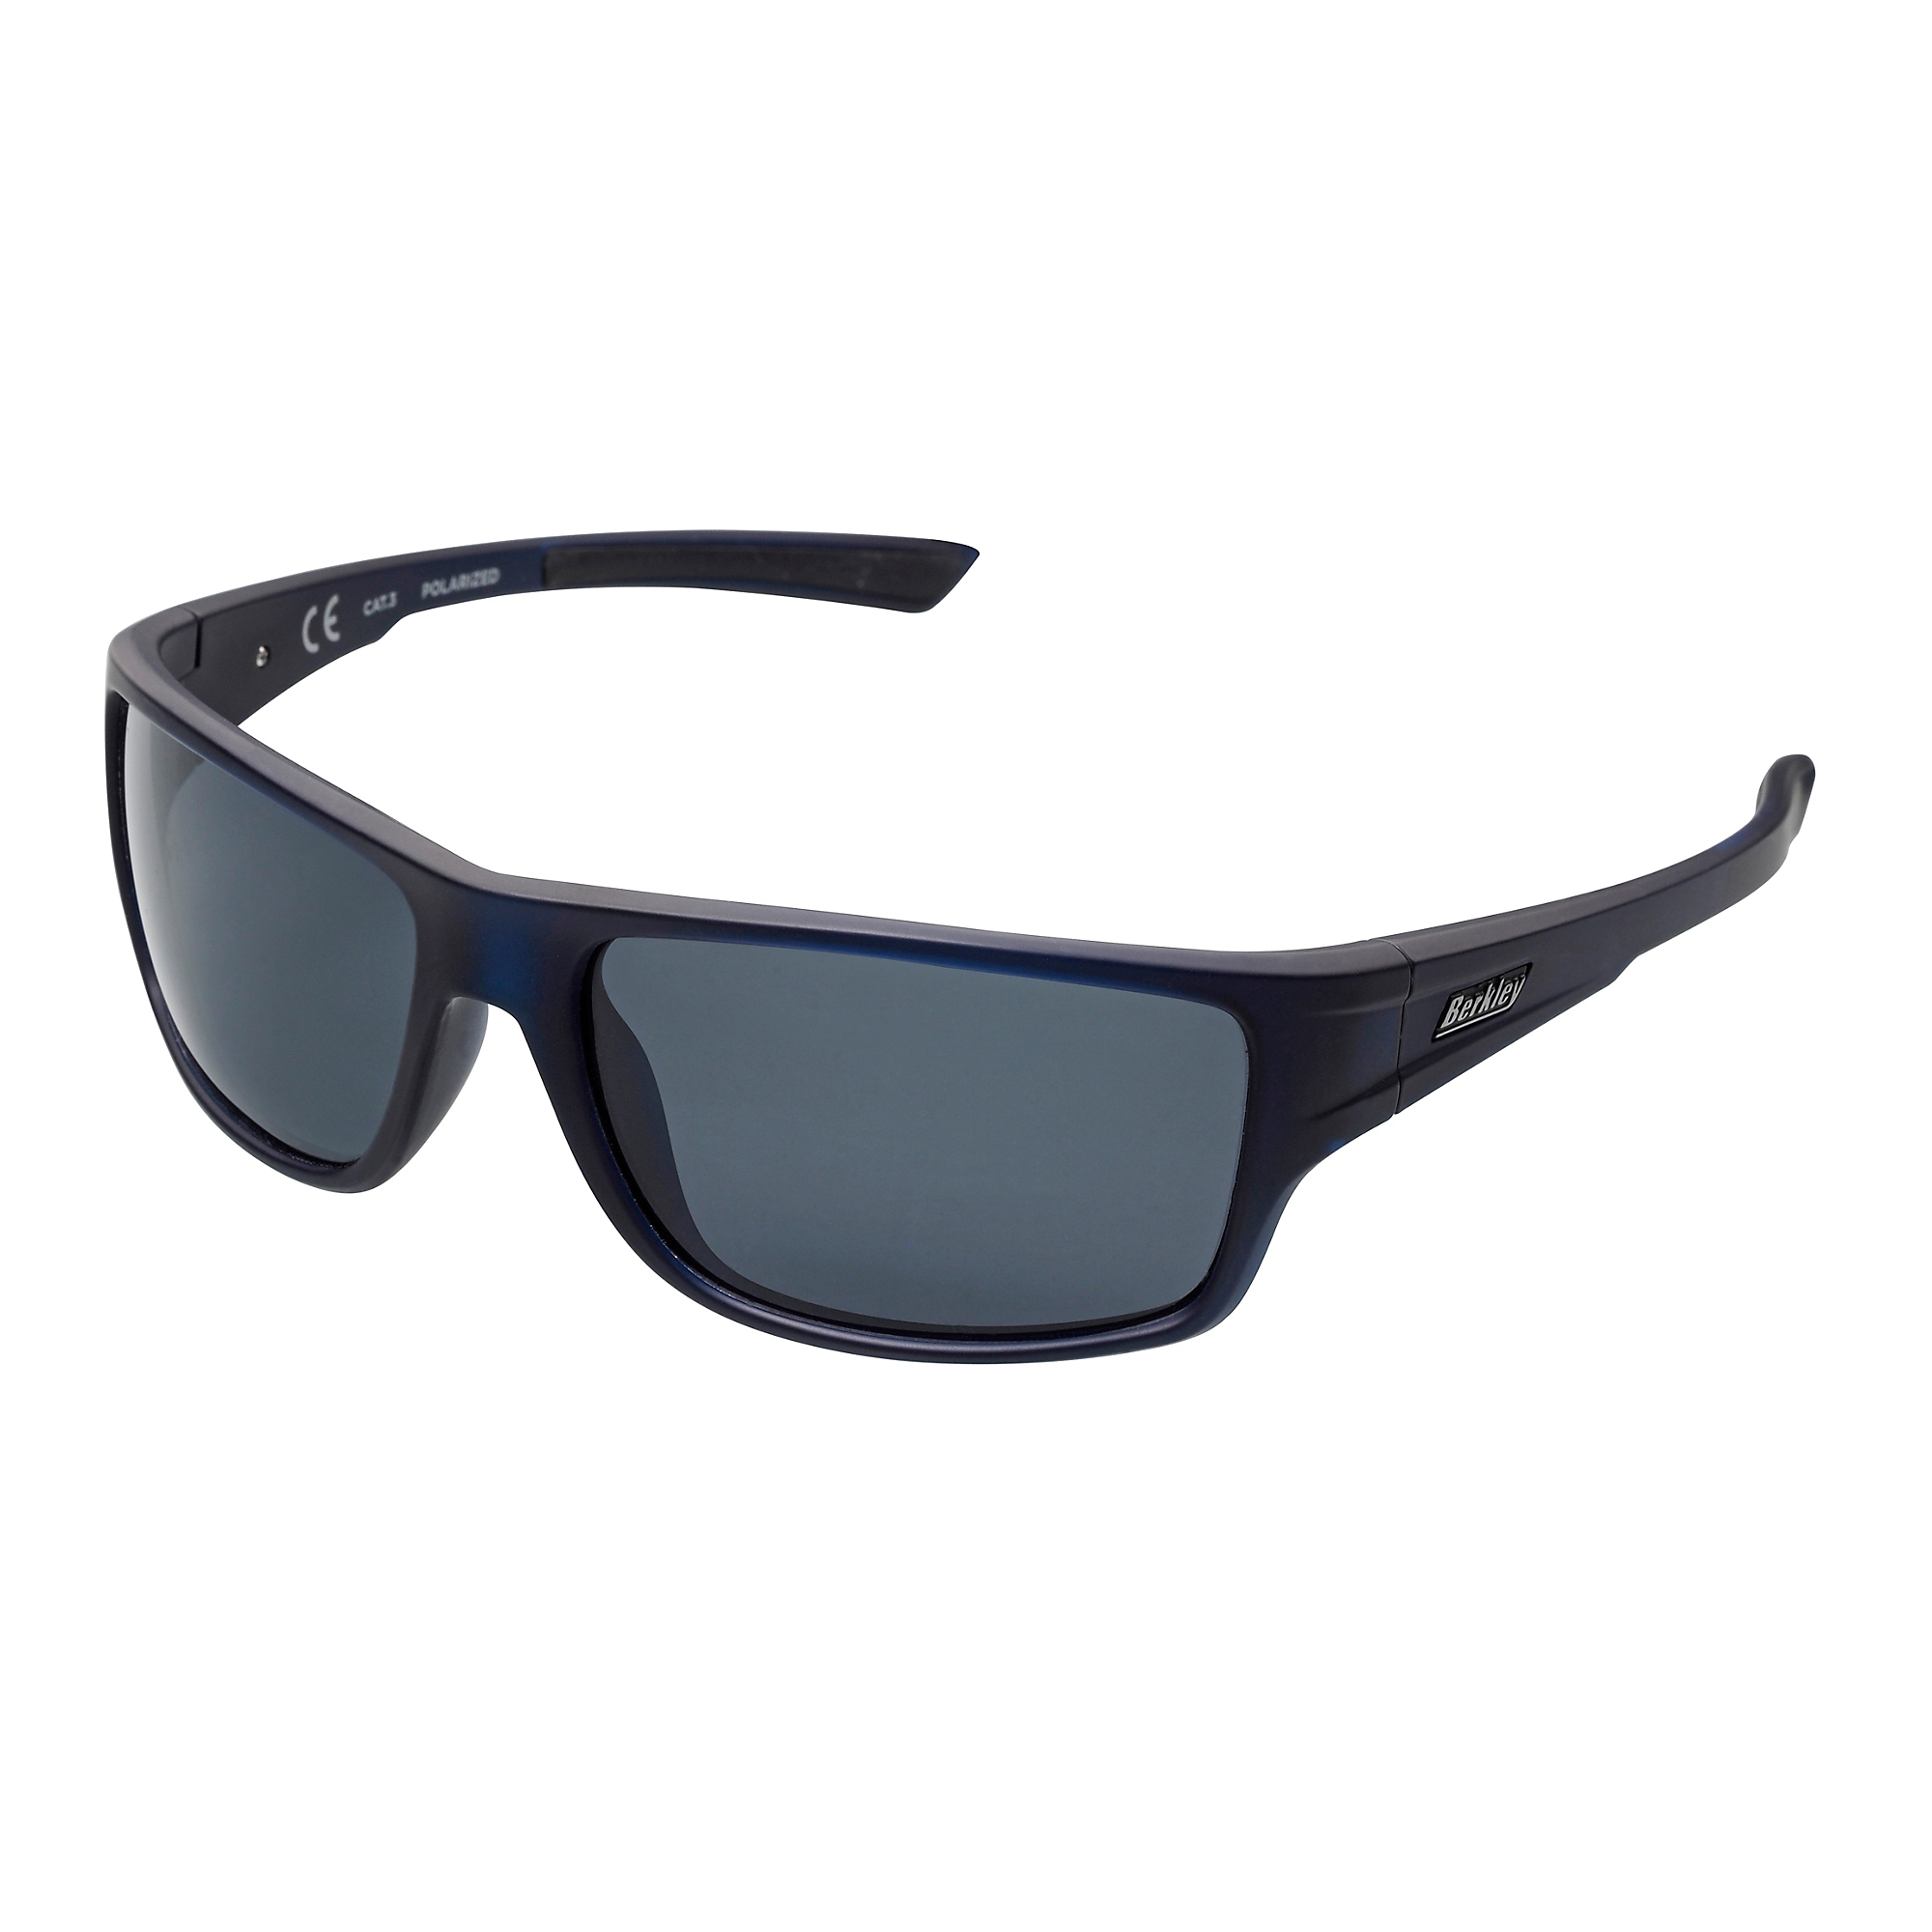 Berkley B11 Sunglasses - Noir / Gris